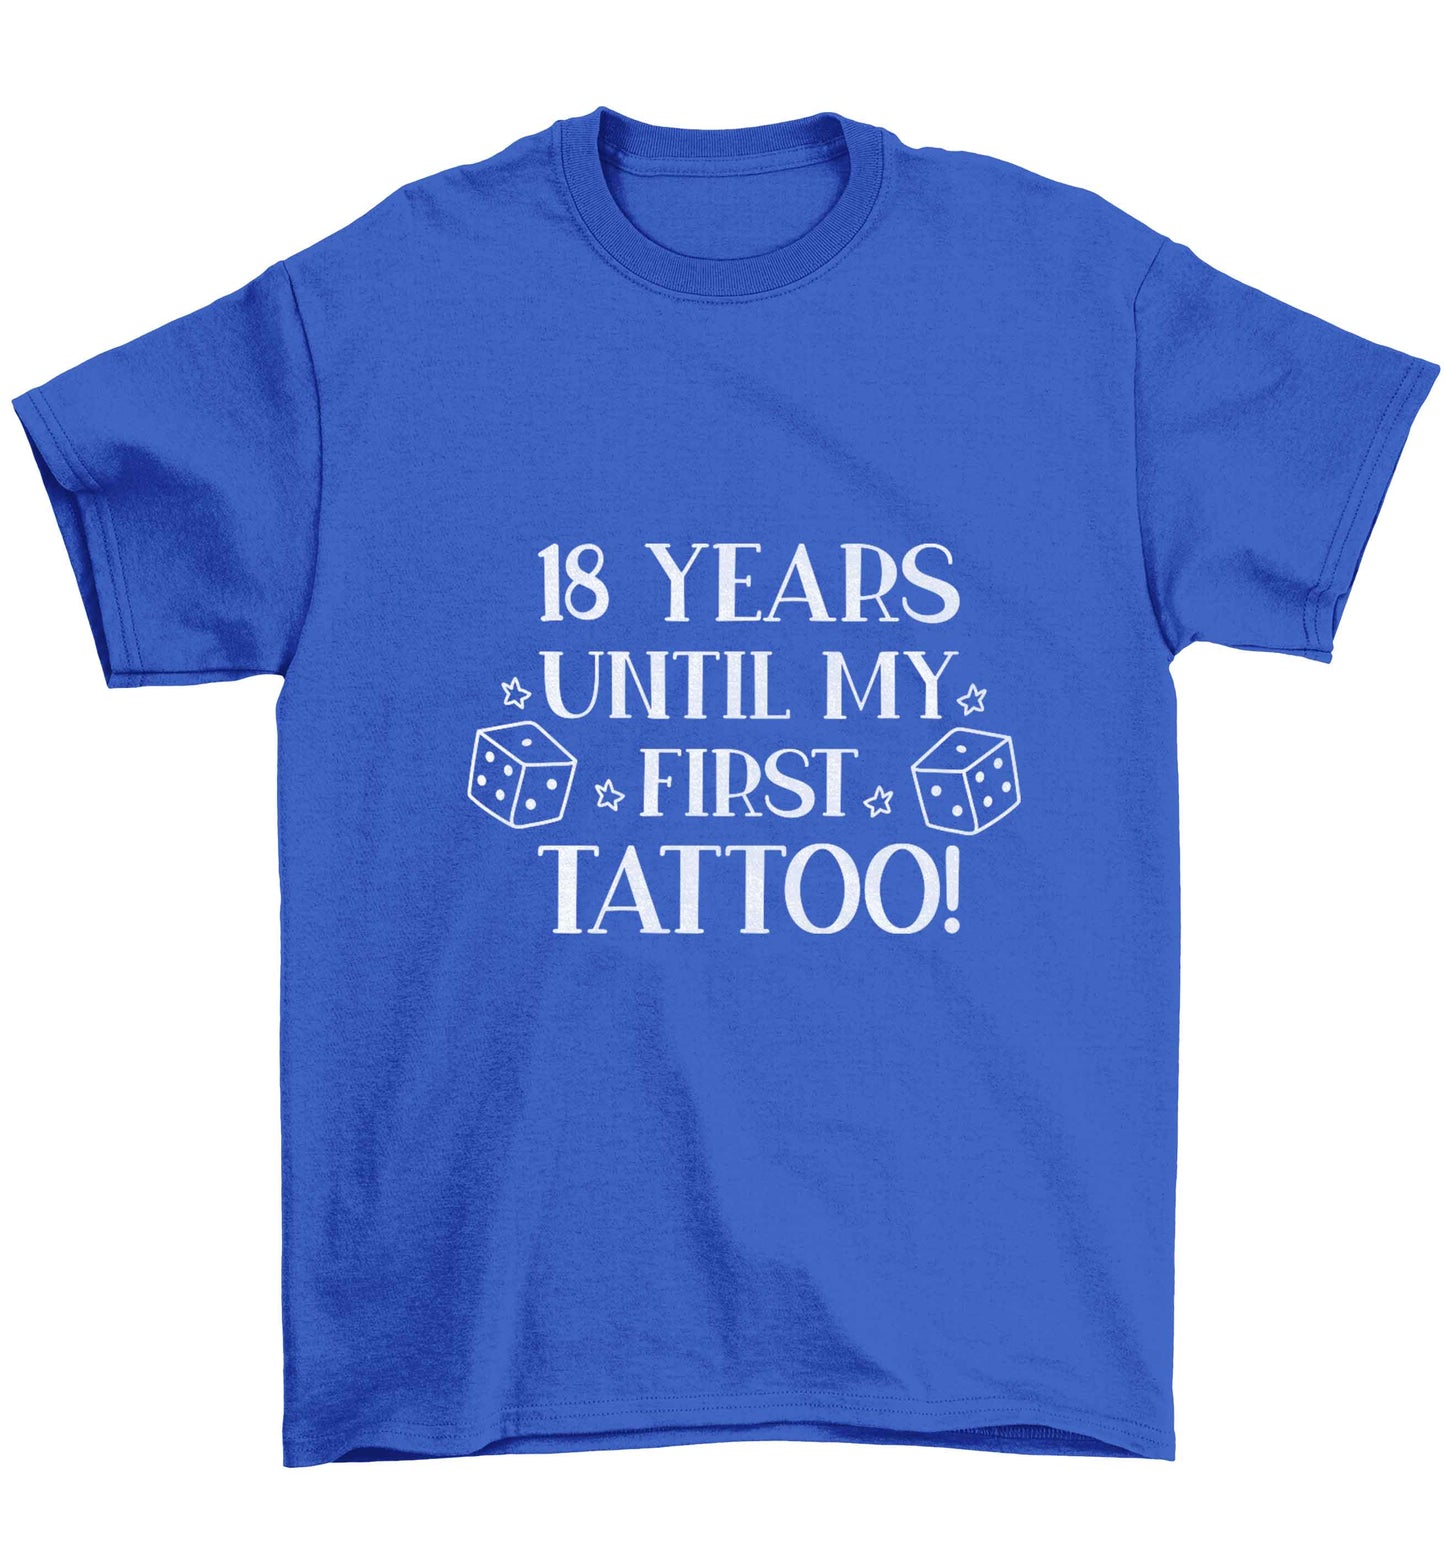 18 Years Until my First Tattoo Children's blue Tshirt 12-13 Years